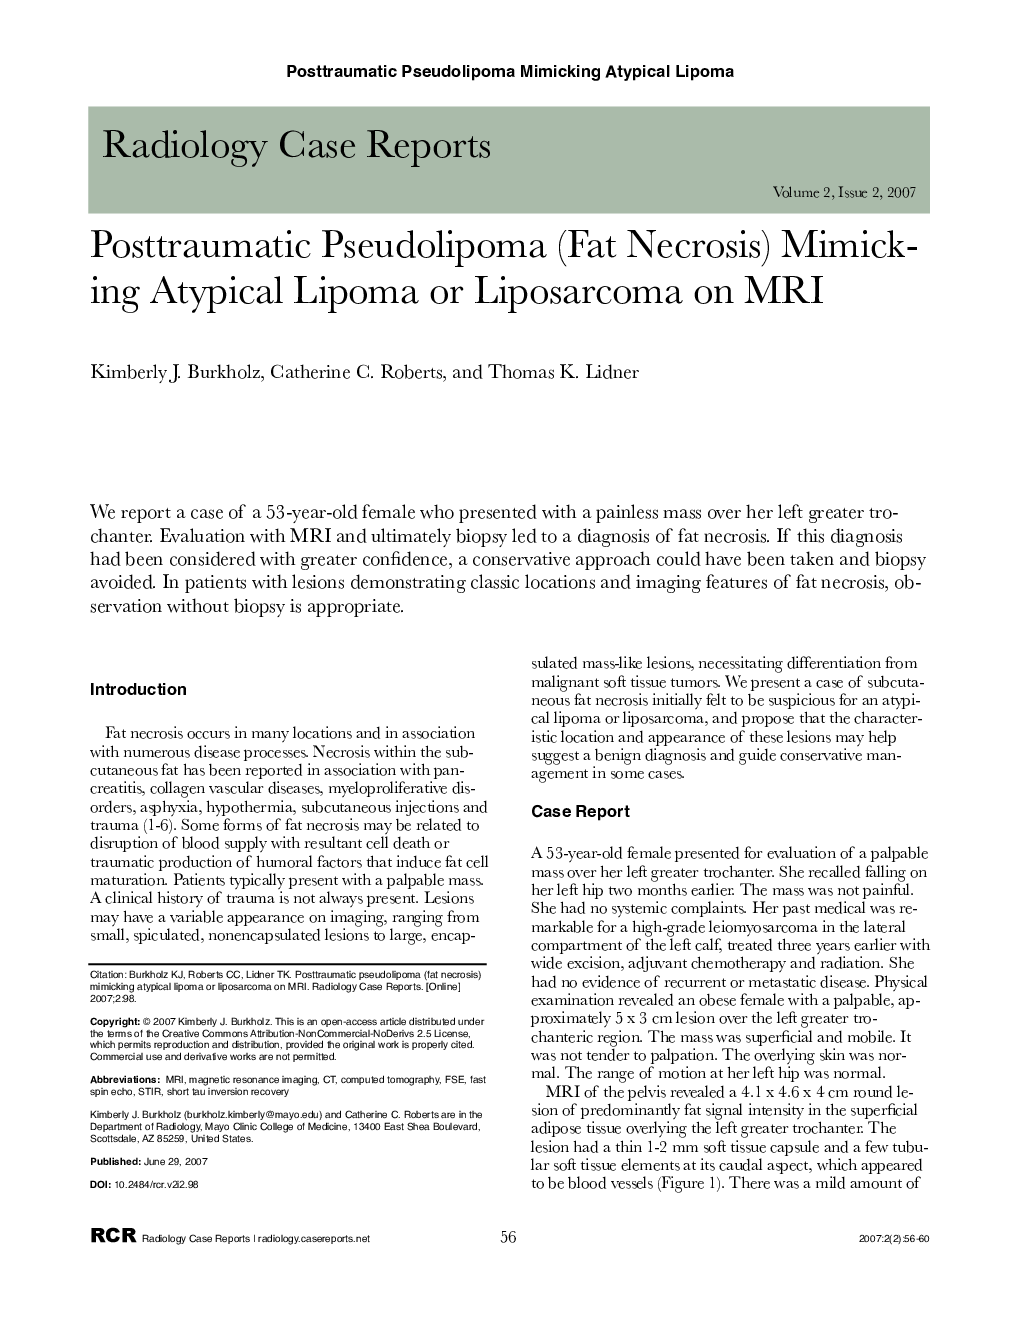 Posttraumatic Pseudolipoma (Fat Necrosis) Mimicking Atypical Lipoma or Liposarcoma on MRI 